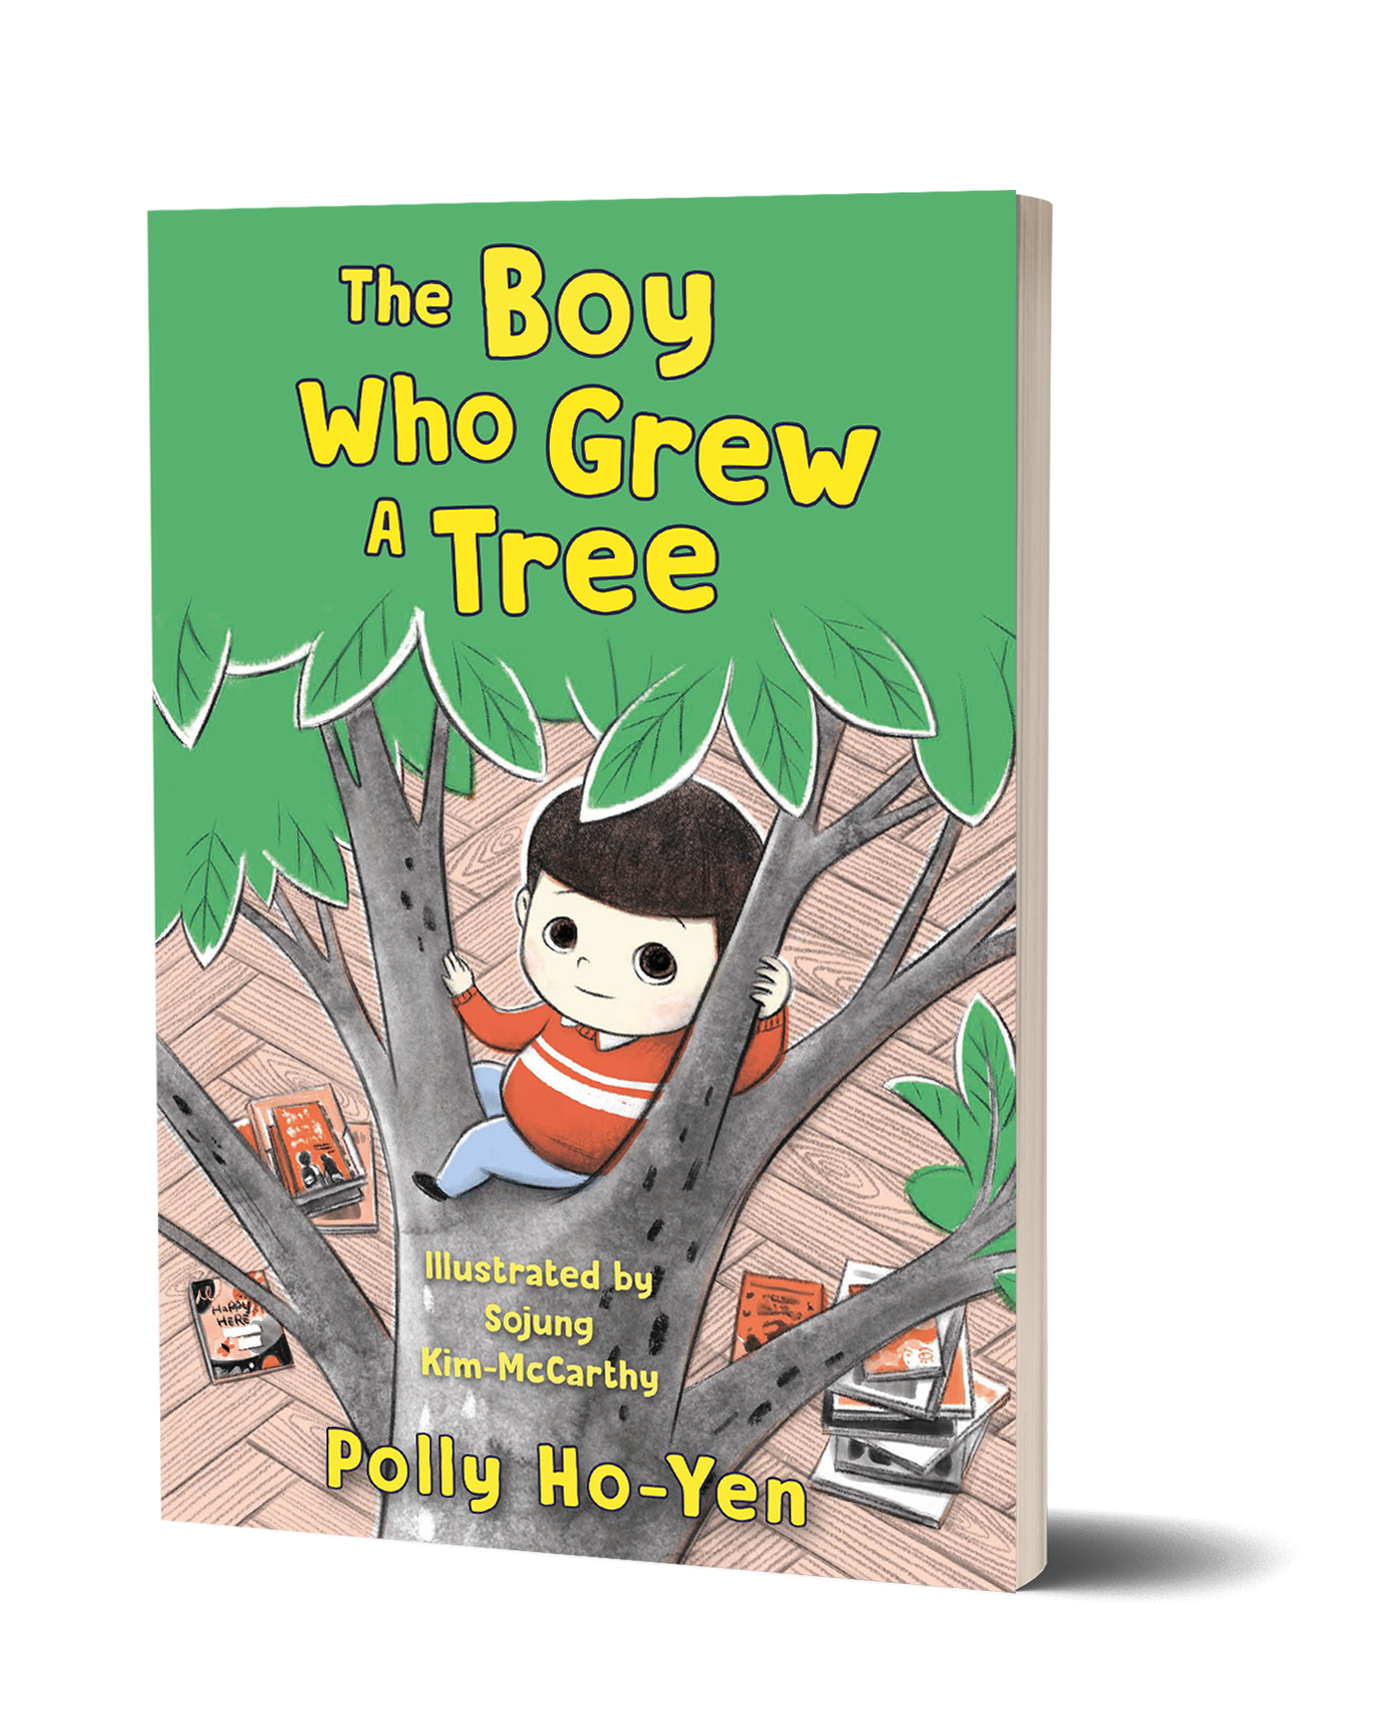 The Boy Who Grew A Tree